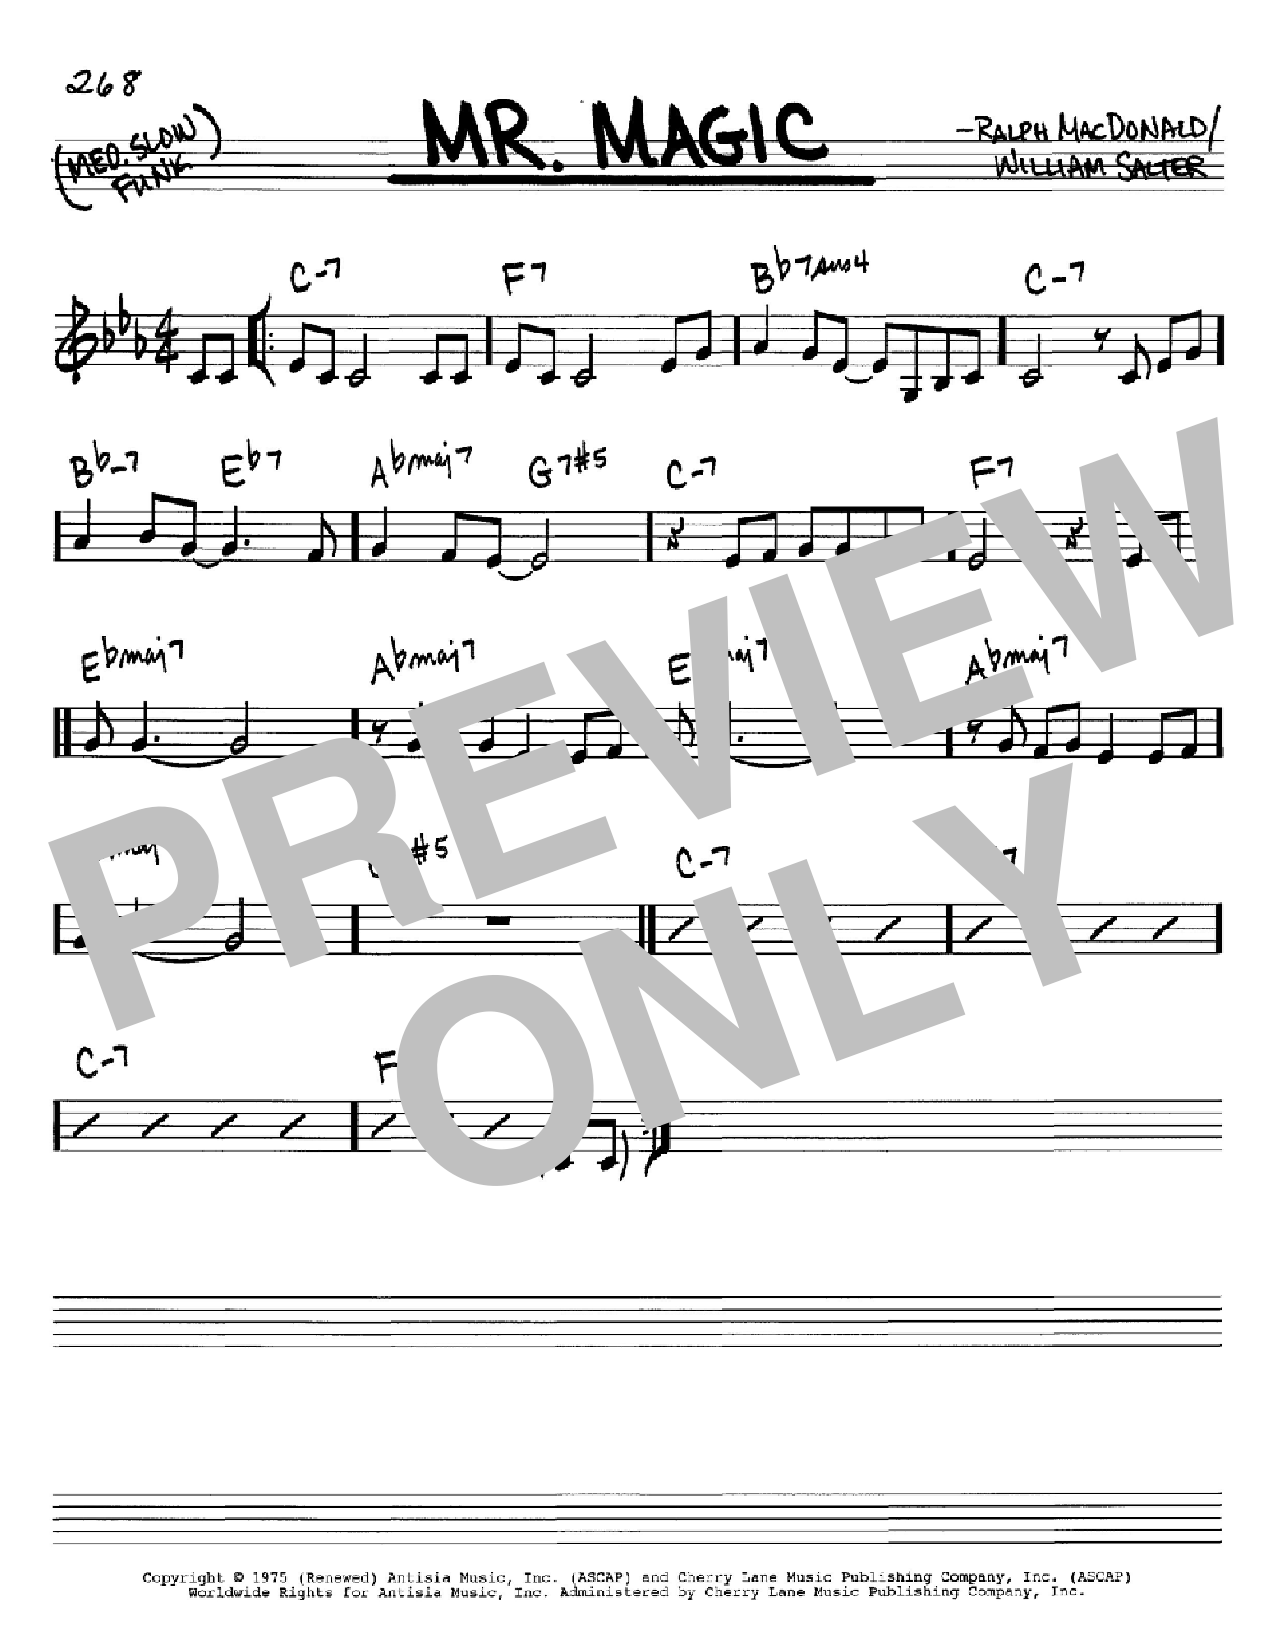 Ralph MacDonald Mr. Magic Sheet Music Notes & Chords for Real Book - Melody & Chords - C Instruments - Download or Print PDF